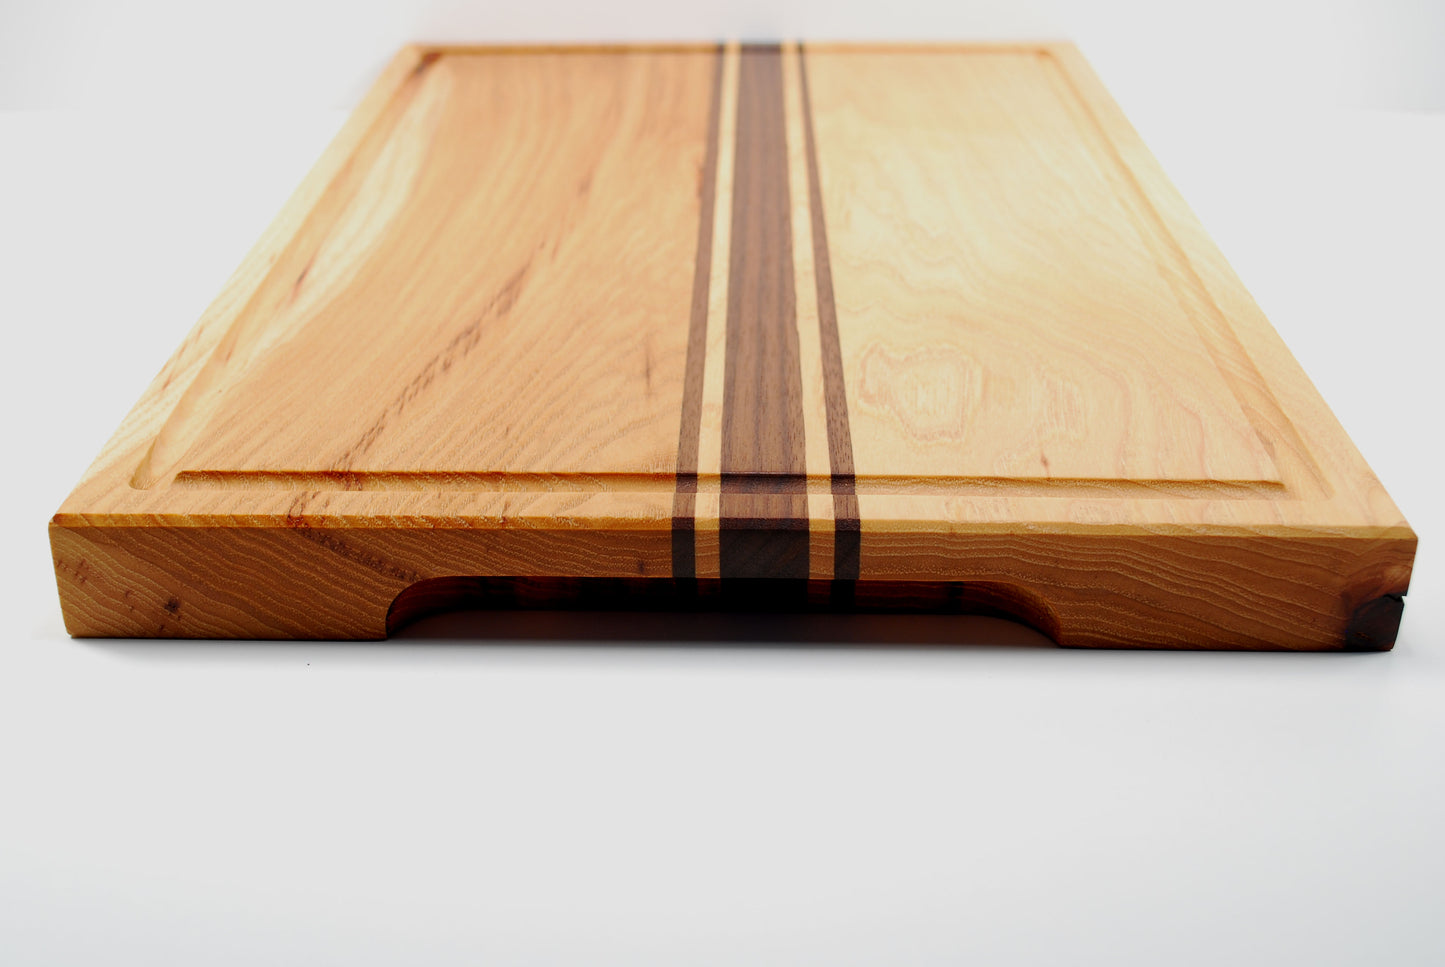 Wood Cutting Board - Walnut and Maple Wood